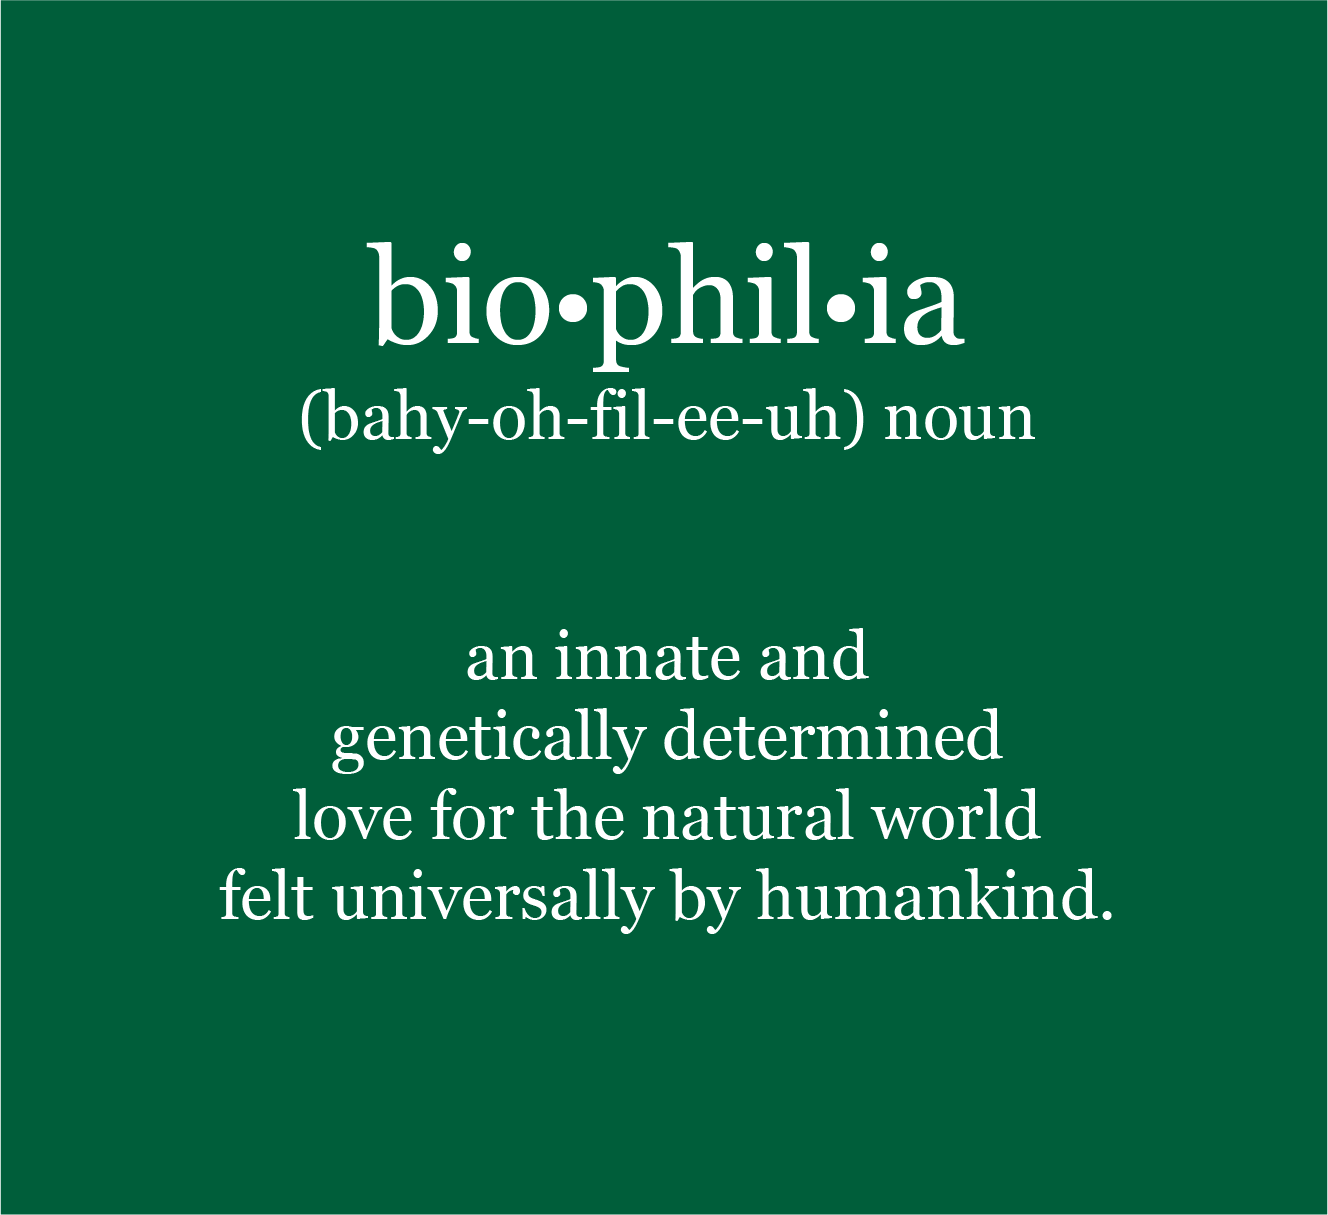 Biophilia explains our innate habit of seeking out nature.